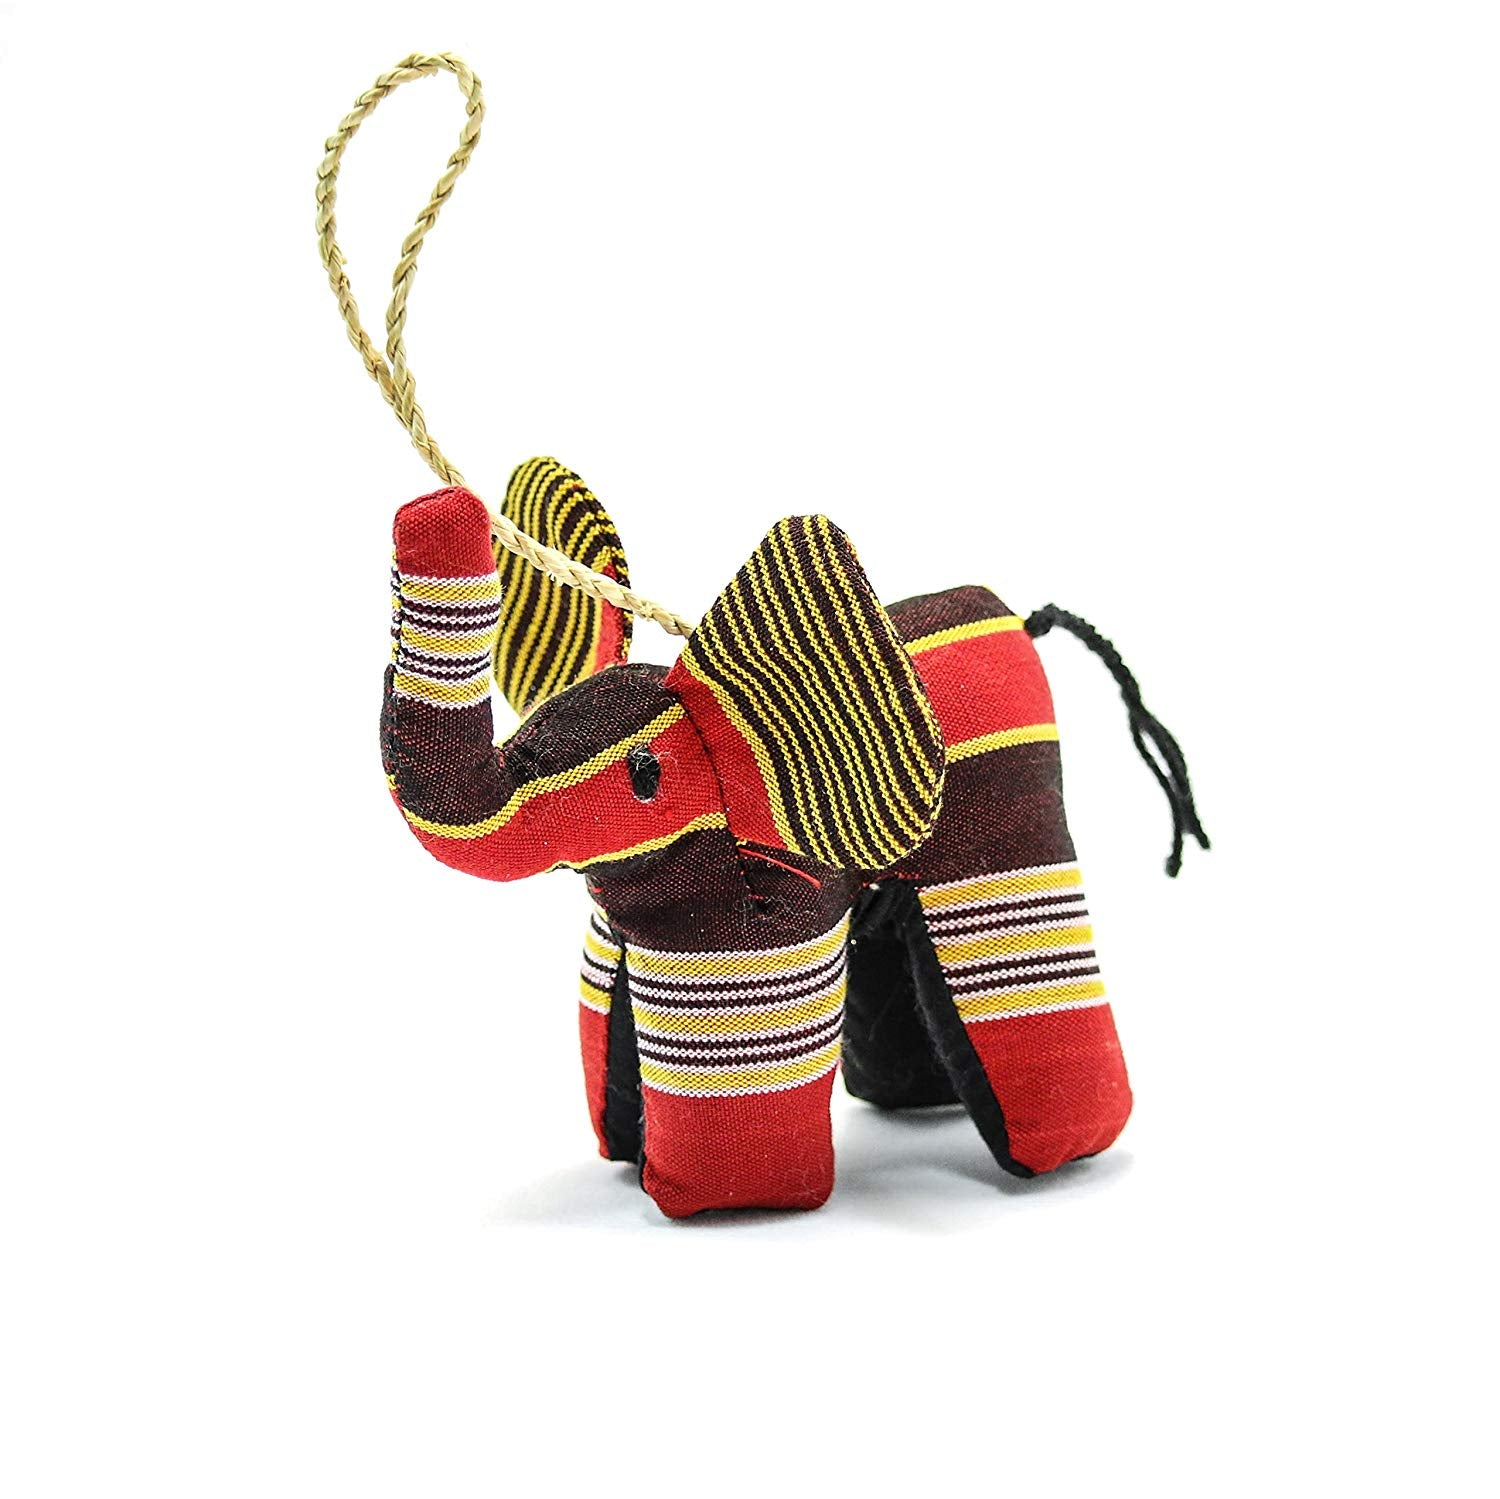 Stuffed Animal Ornament Set of 5 - Kikoy Red